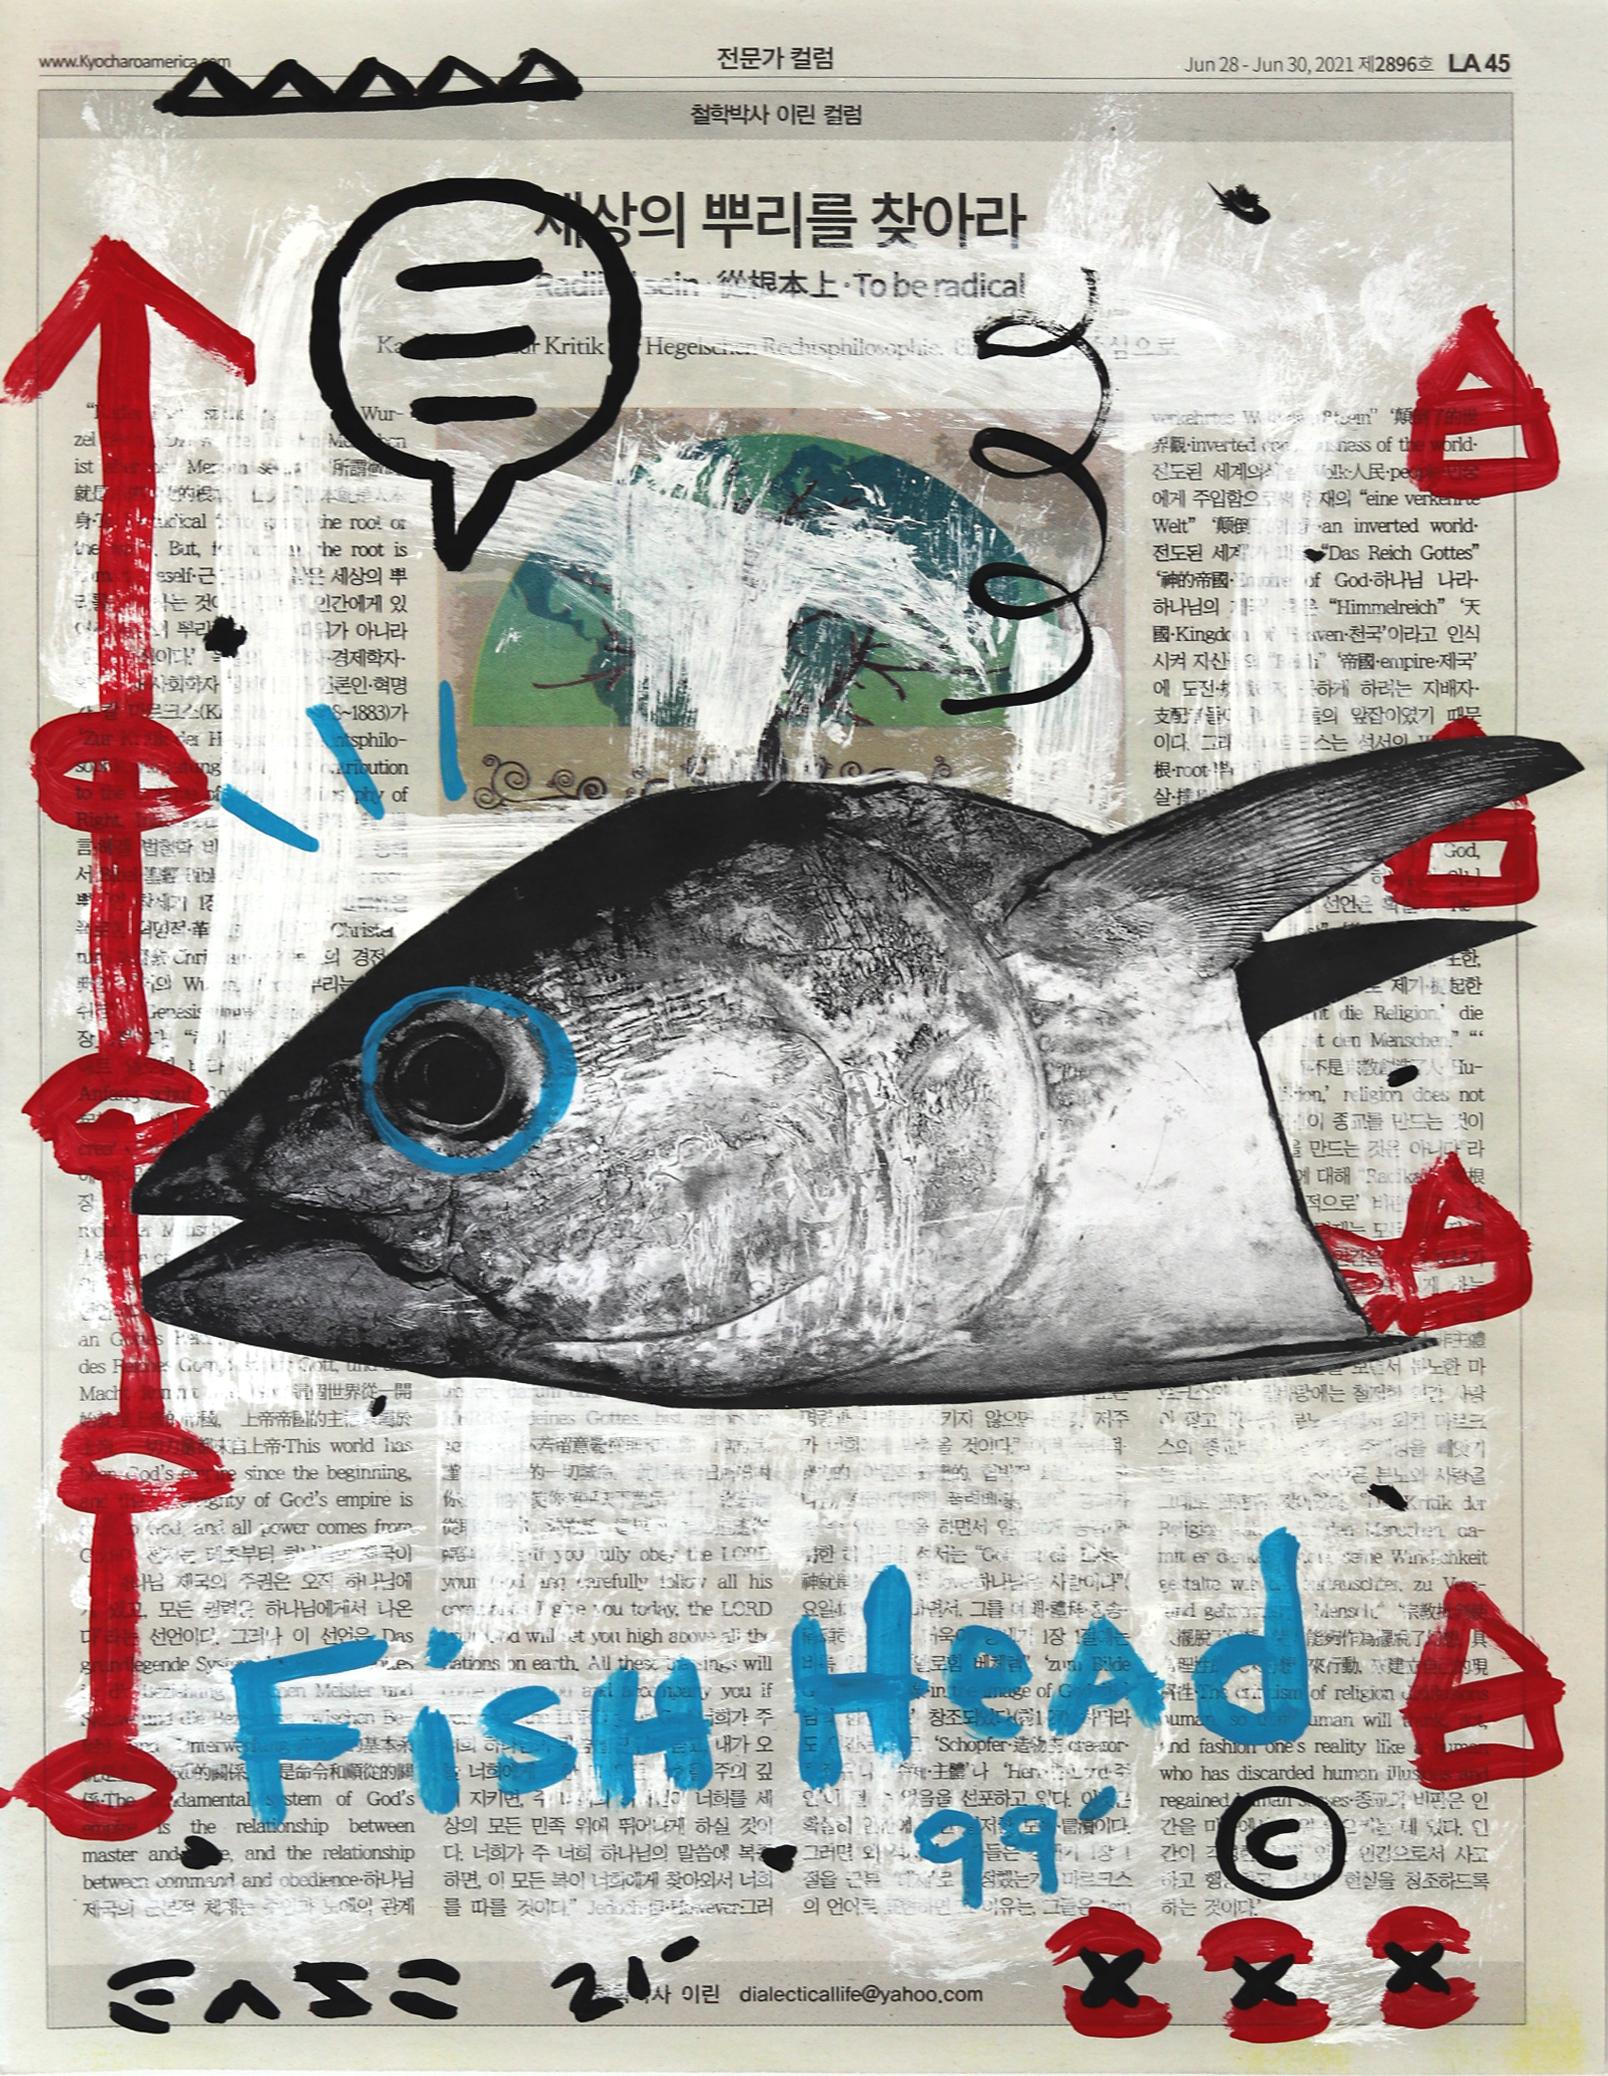 Gary John Abstract Painting - "Fish Head 99" - Original Mixed Media Painting on Newspaper